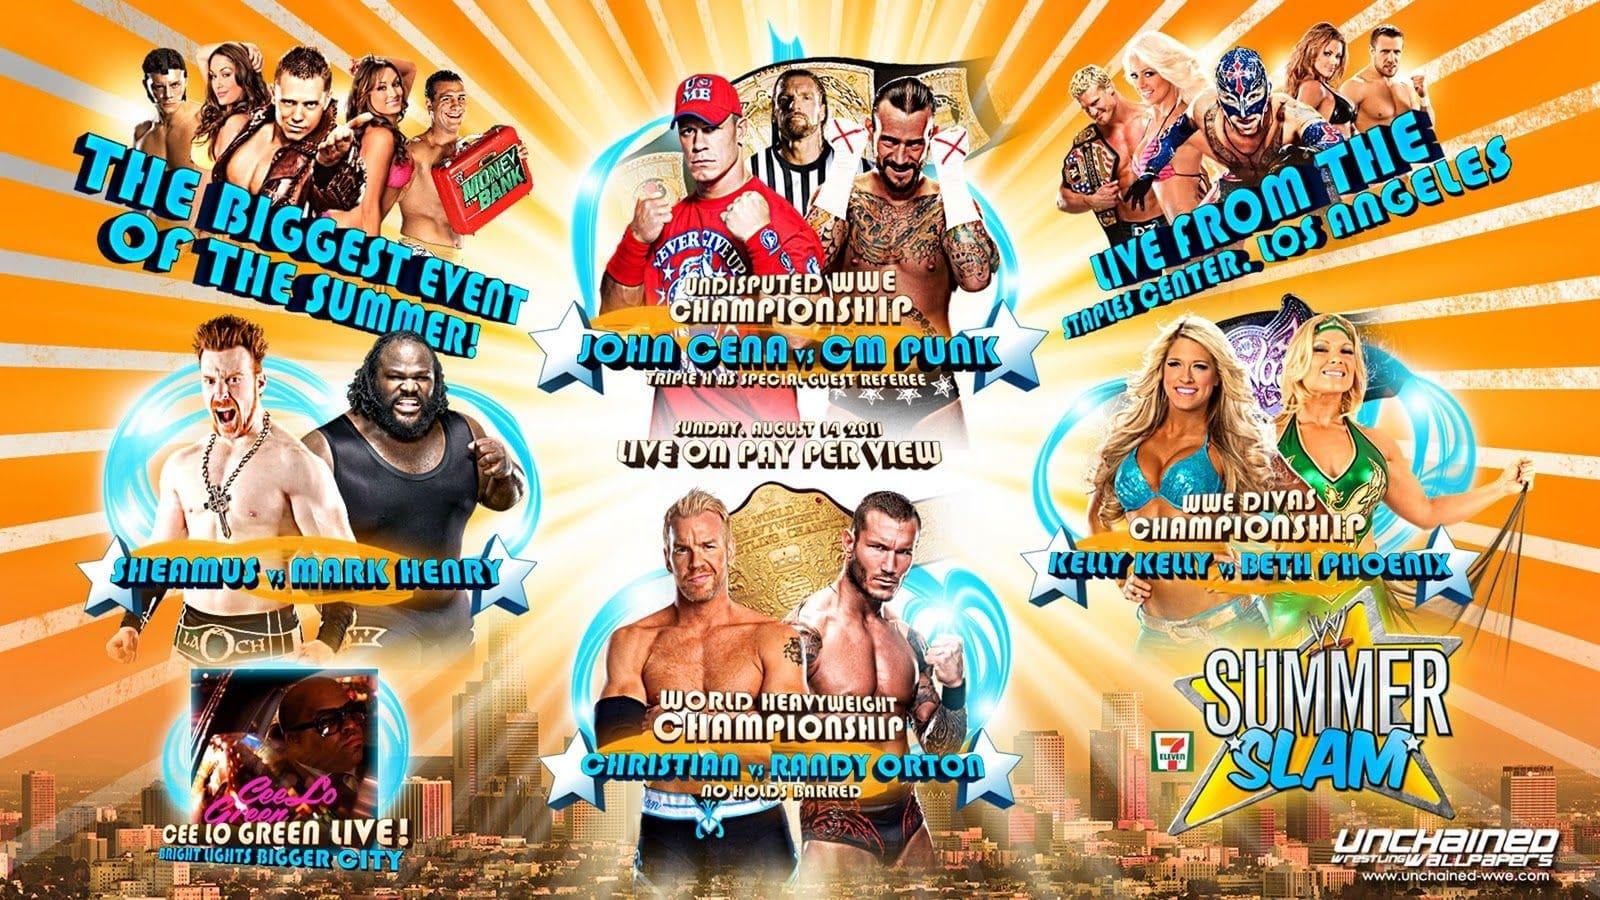 WWE SummerSlam 2011 backdrop